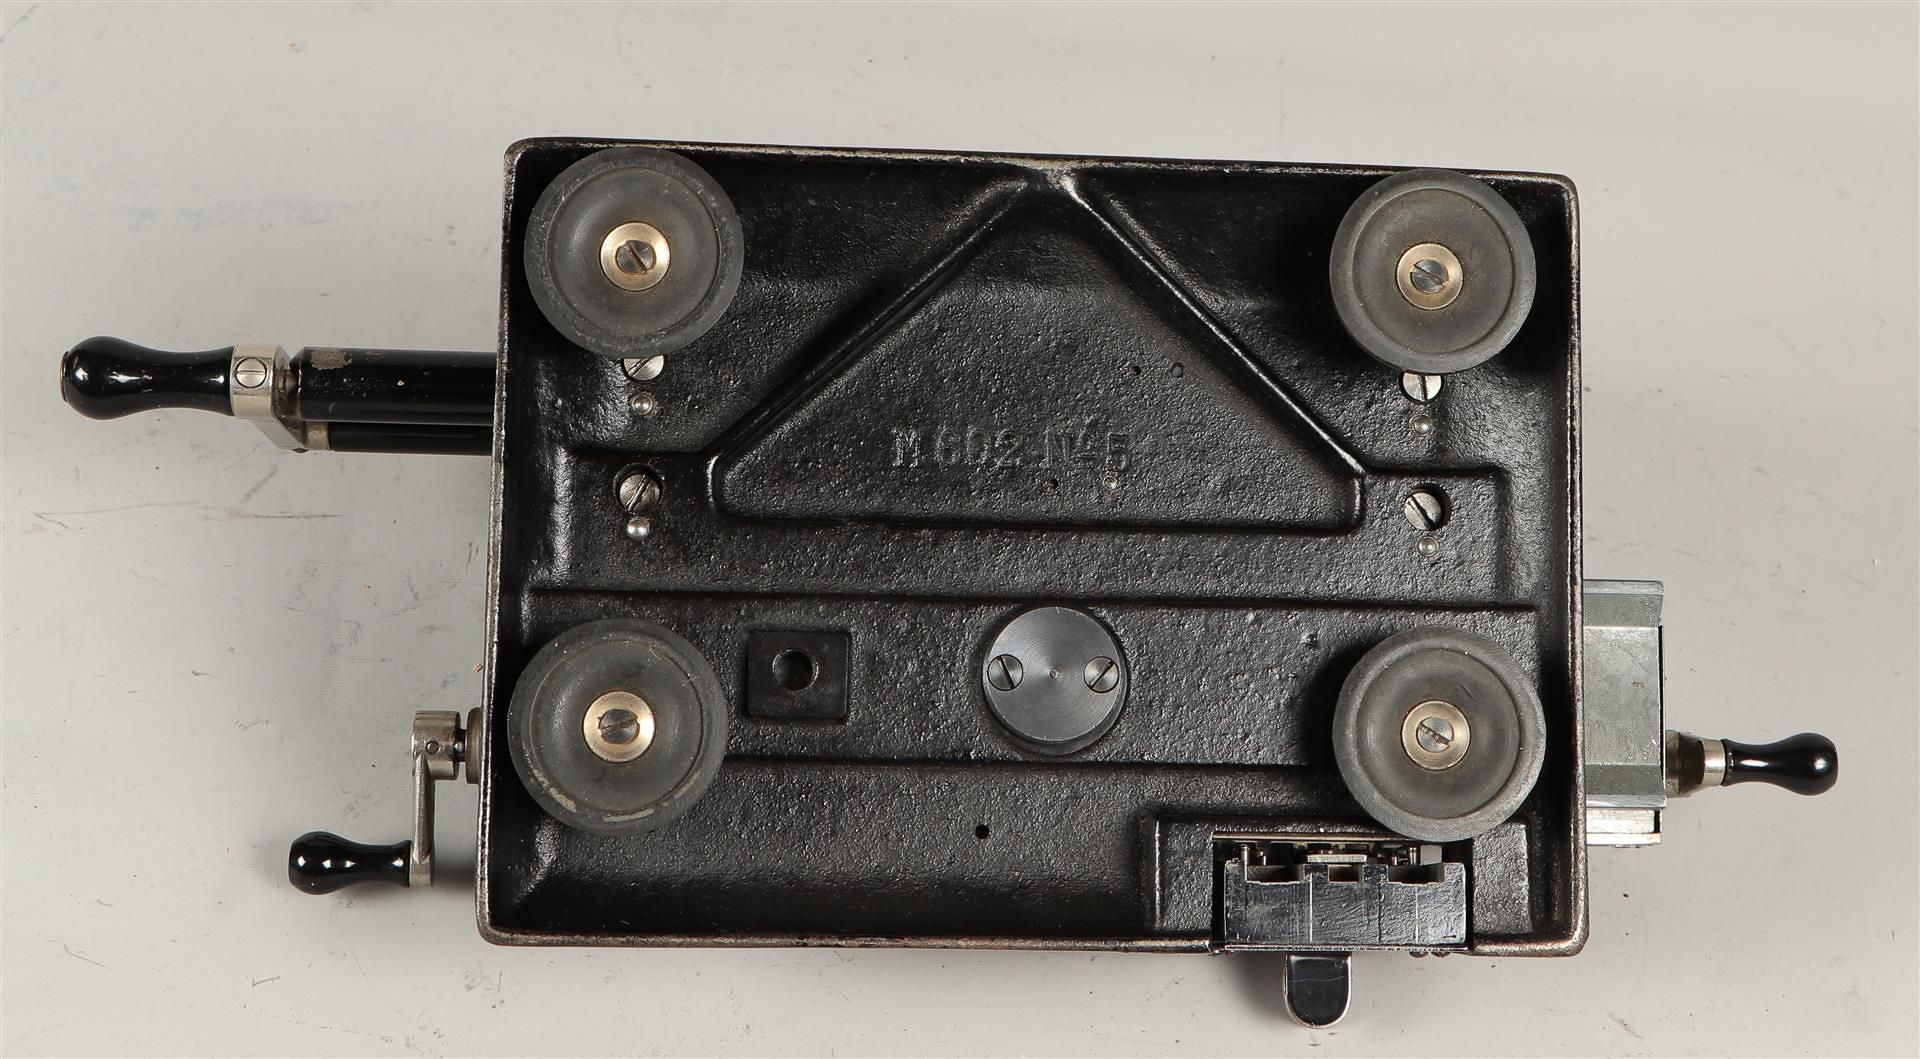 A vintage calculator of the brand Original-Odhner, model 602 N 5. Sweden, first half 20th century. - Image 4 of 4